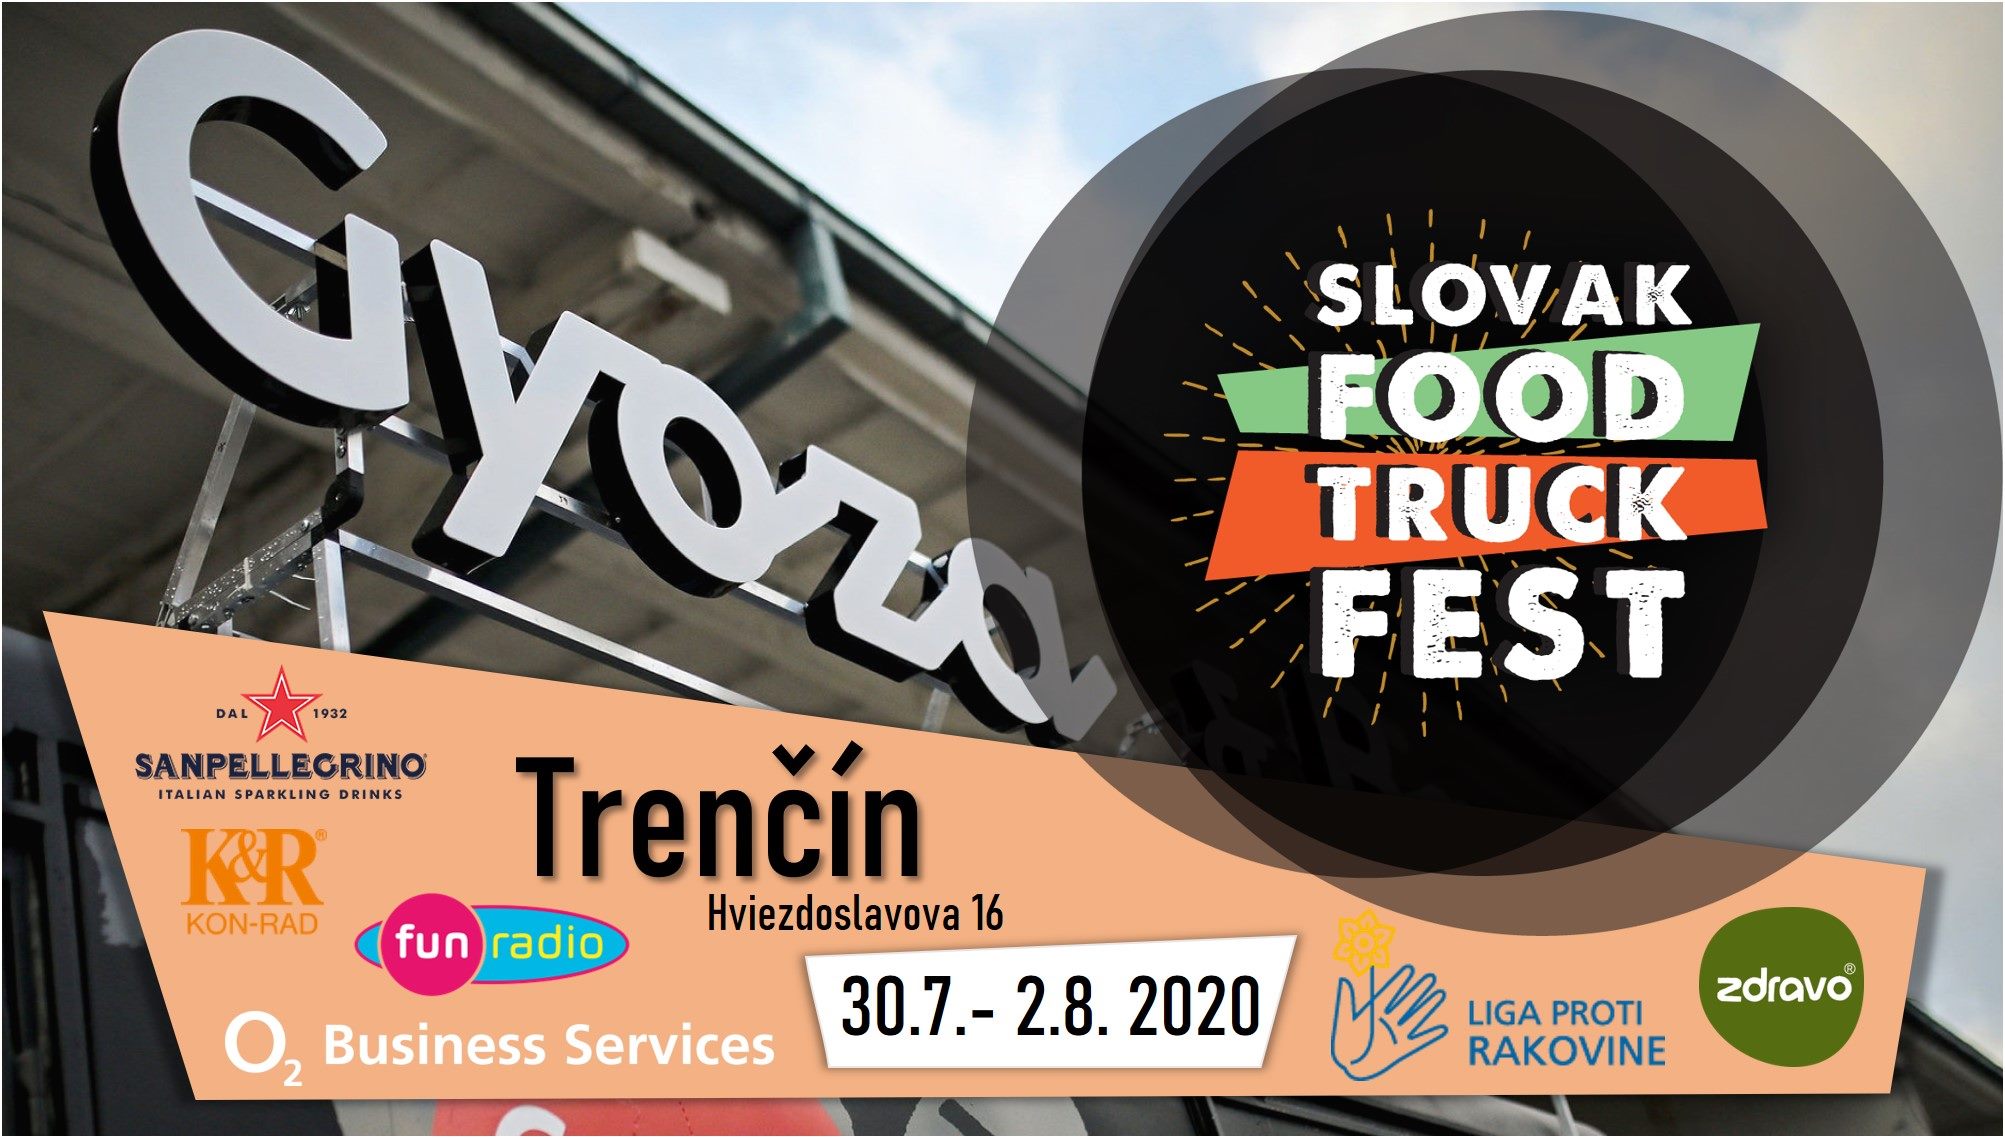 SlovakFoodTruckFest - Trenčín Dom armády